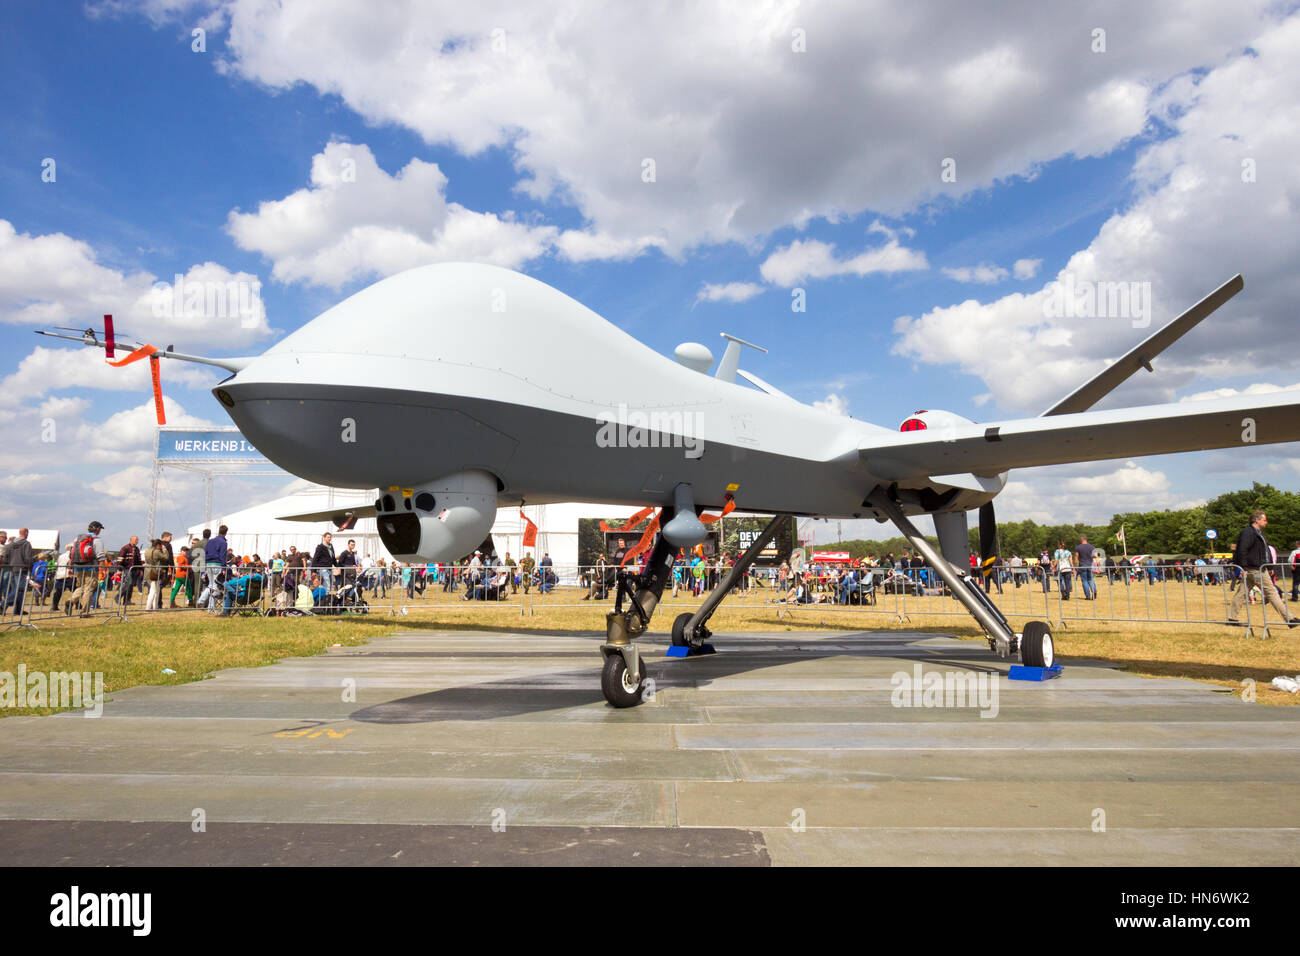 VOLKEL, NETHERLANDS - JUN 15, 2013: Predator UAV on display at the Royal Netherlands Air Force Open Day. Stock Photo